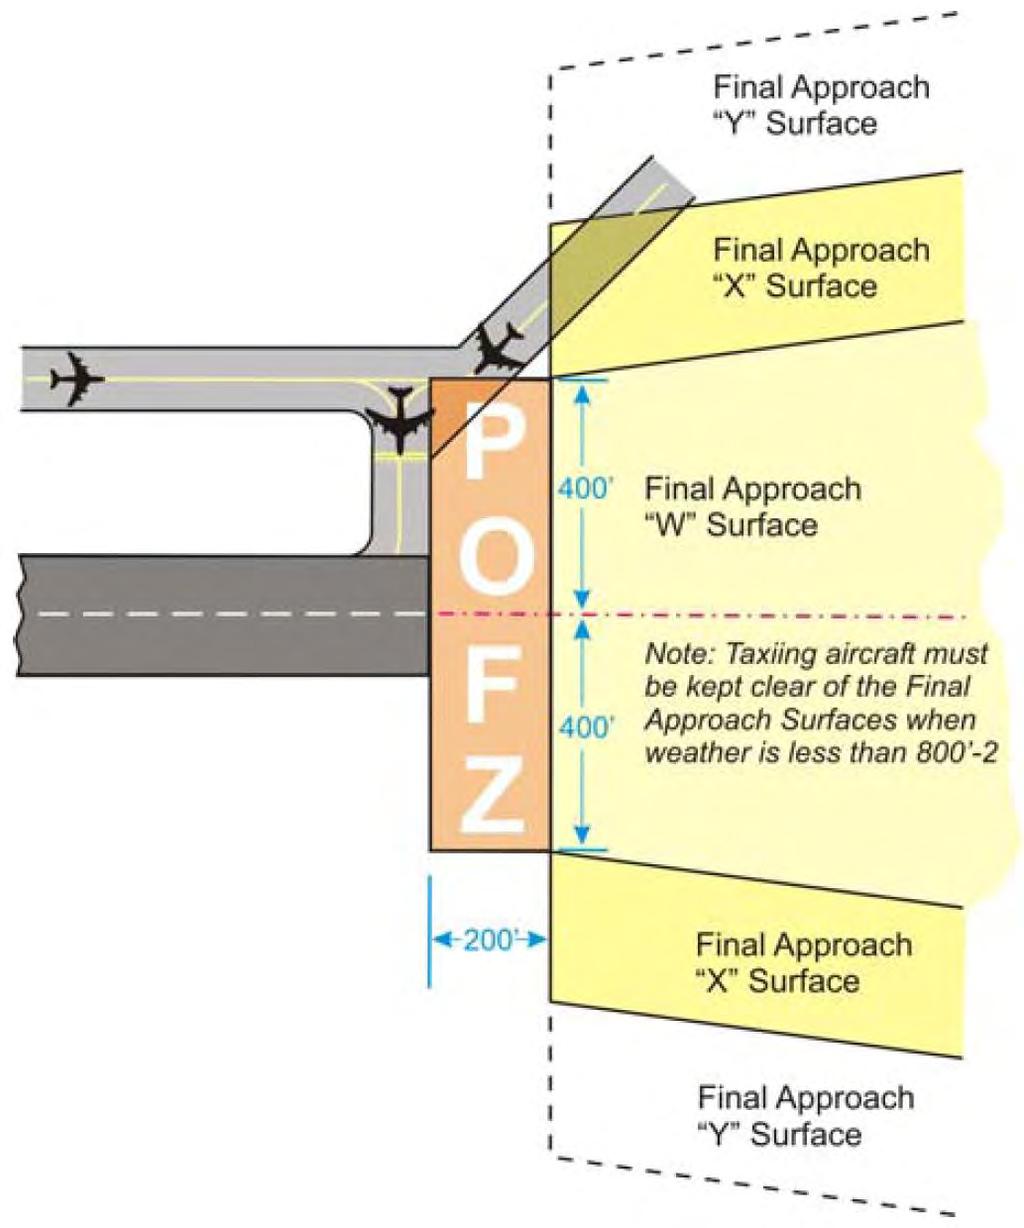 TP 308/GPH 209 Volume 3 Appendix 1 Figure 1: Glide Slope Antenna Placement.